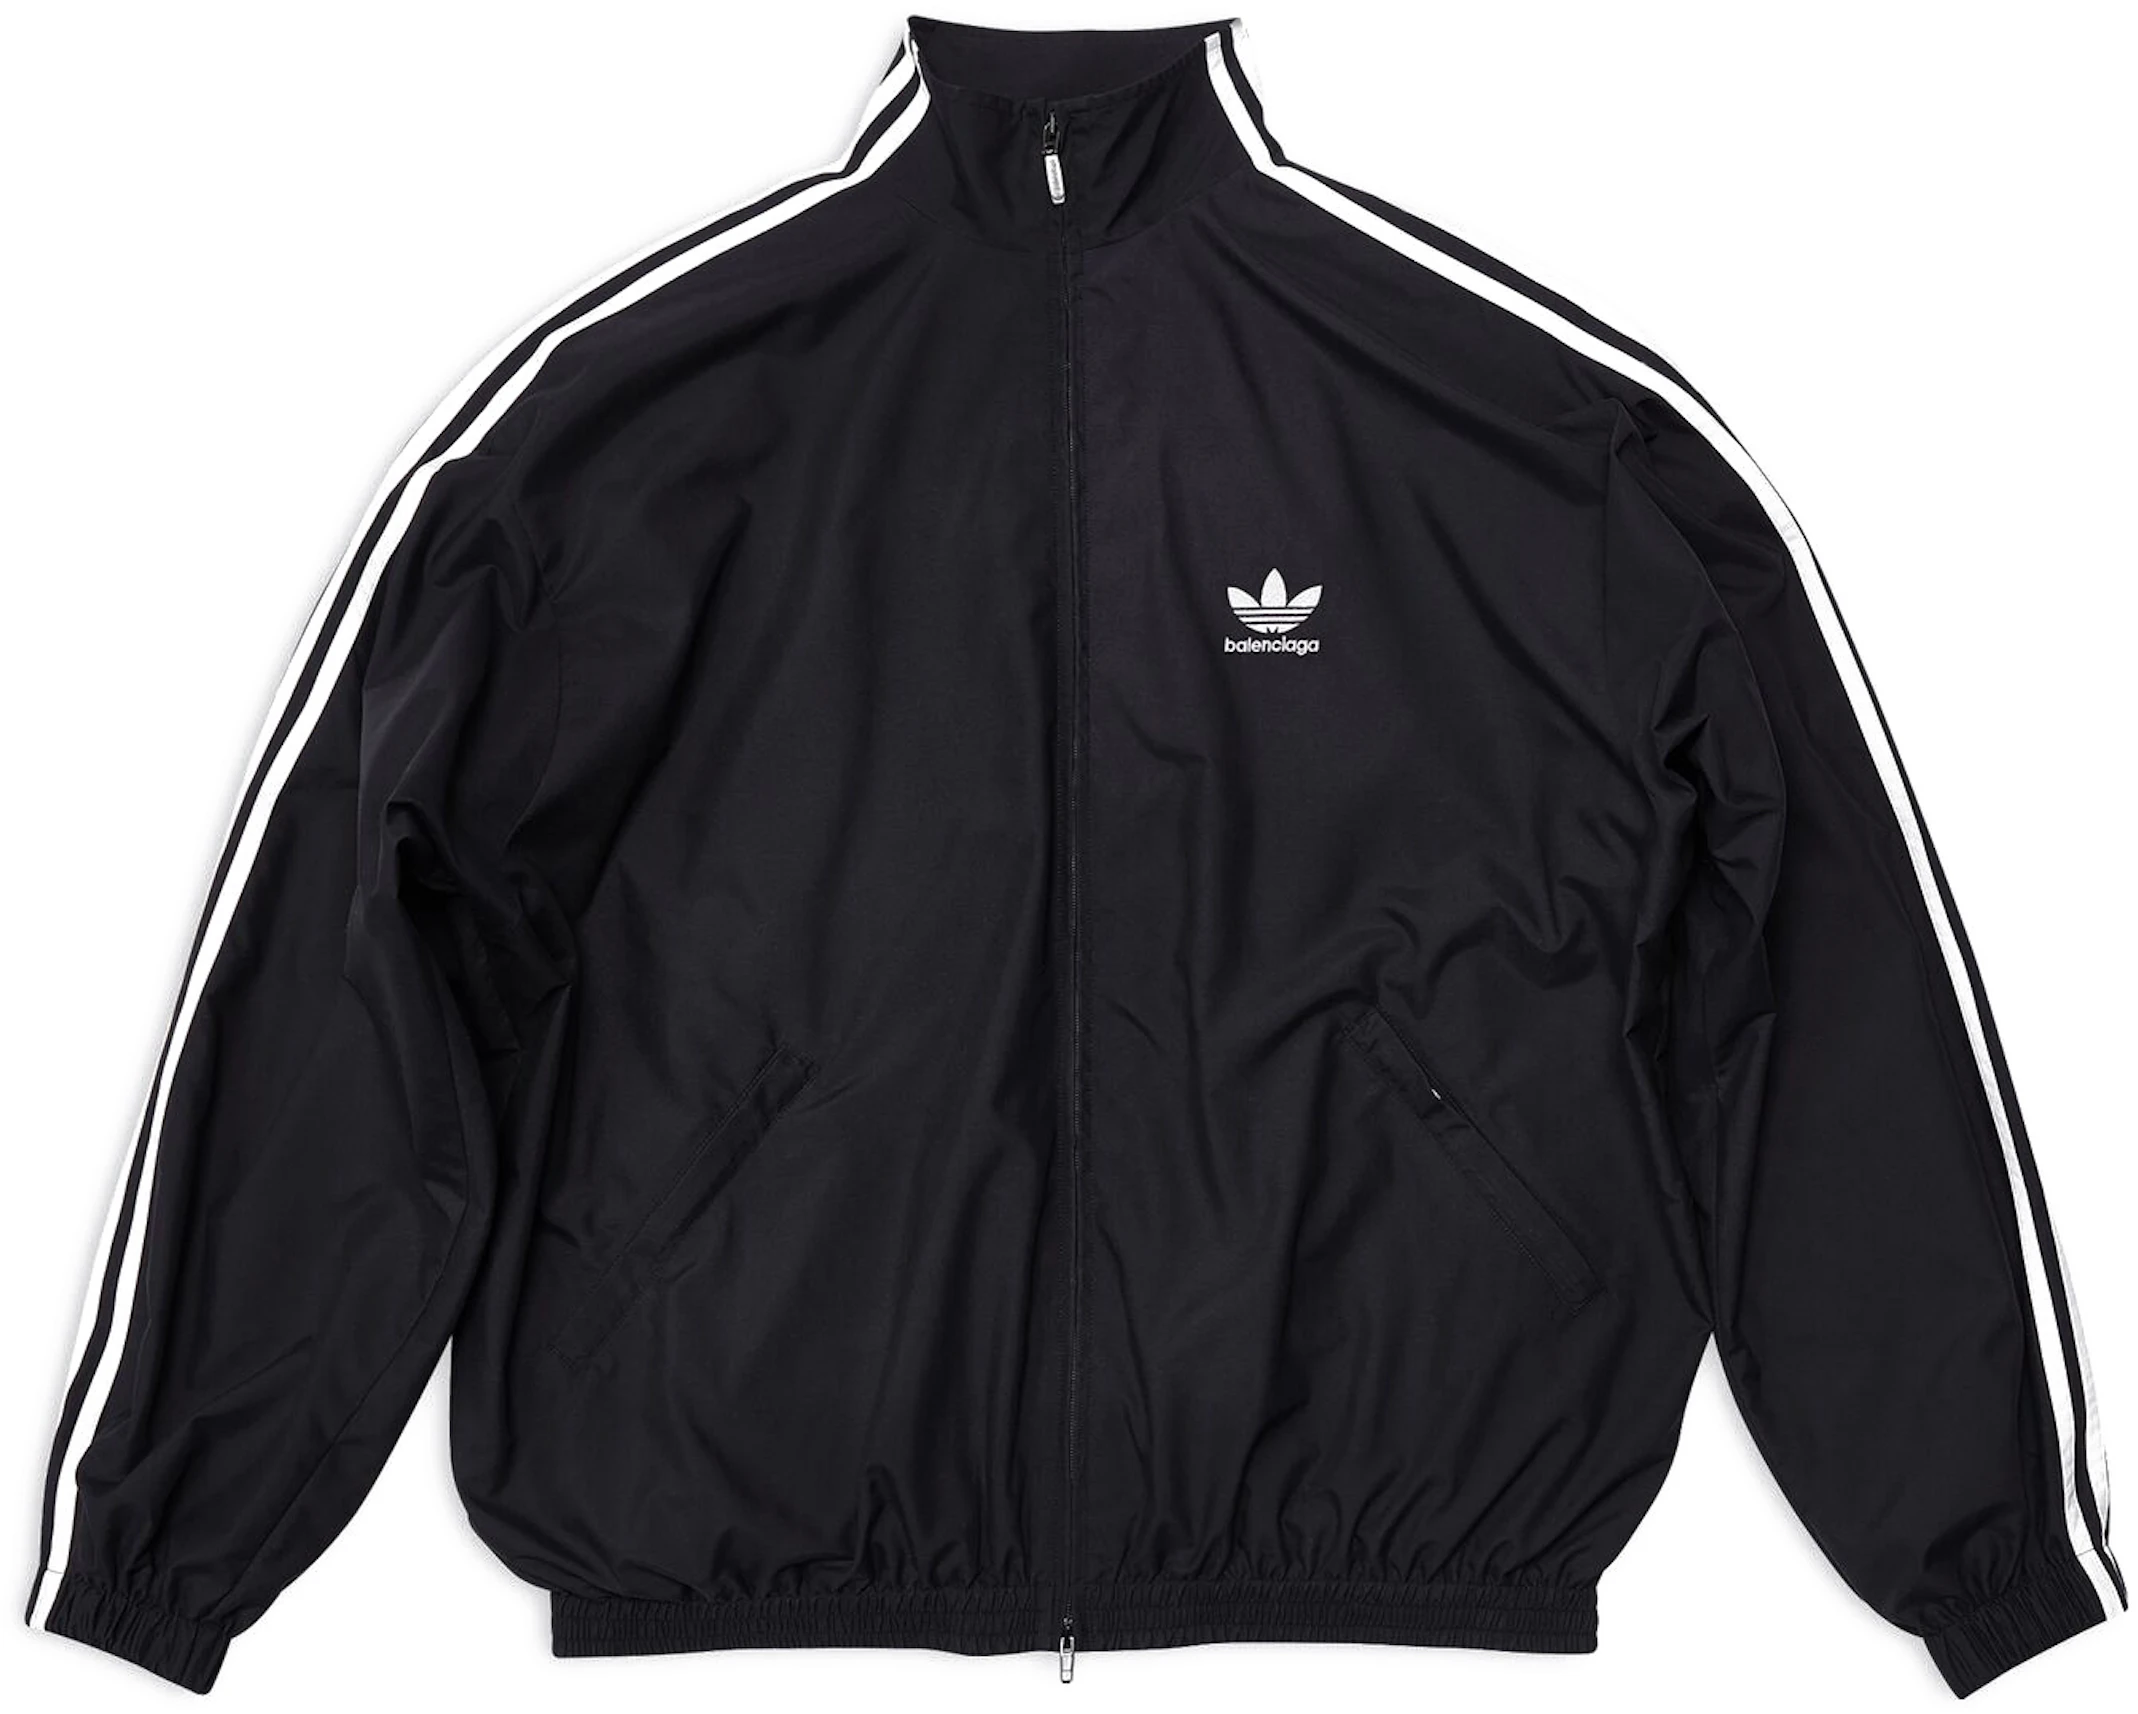 Balenciaga X Adidas Tracksuit Jacket Black White | peacecommission.kdsg ...